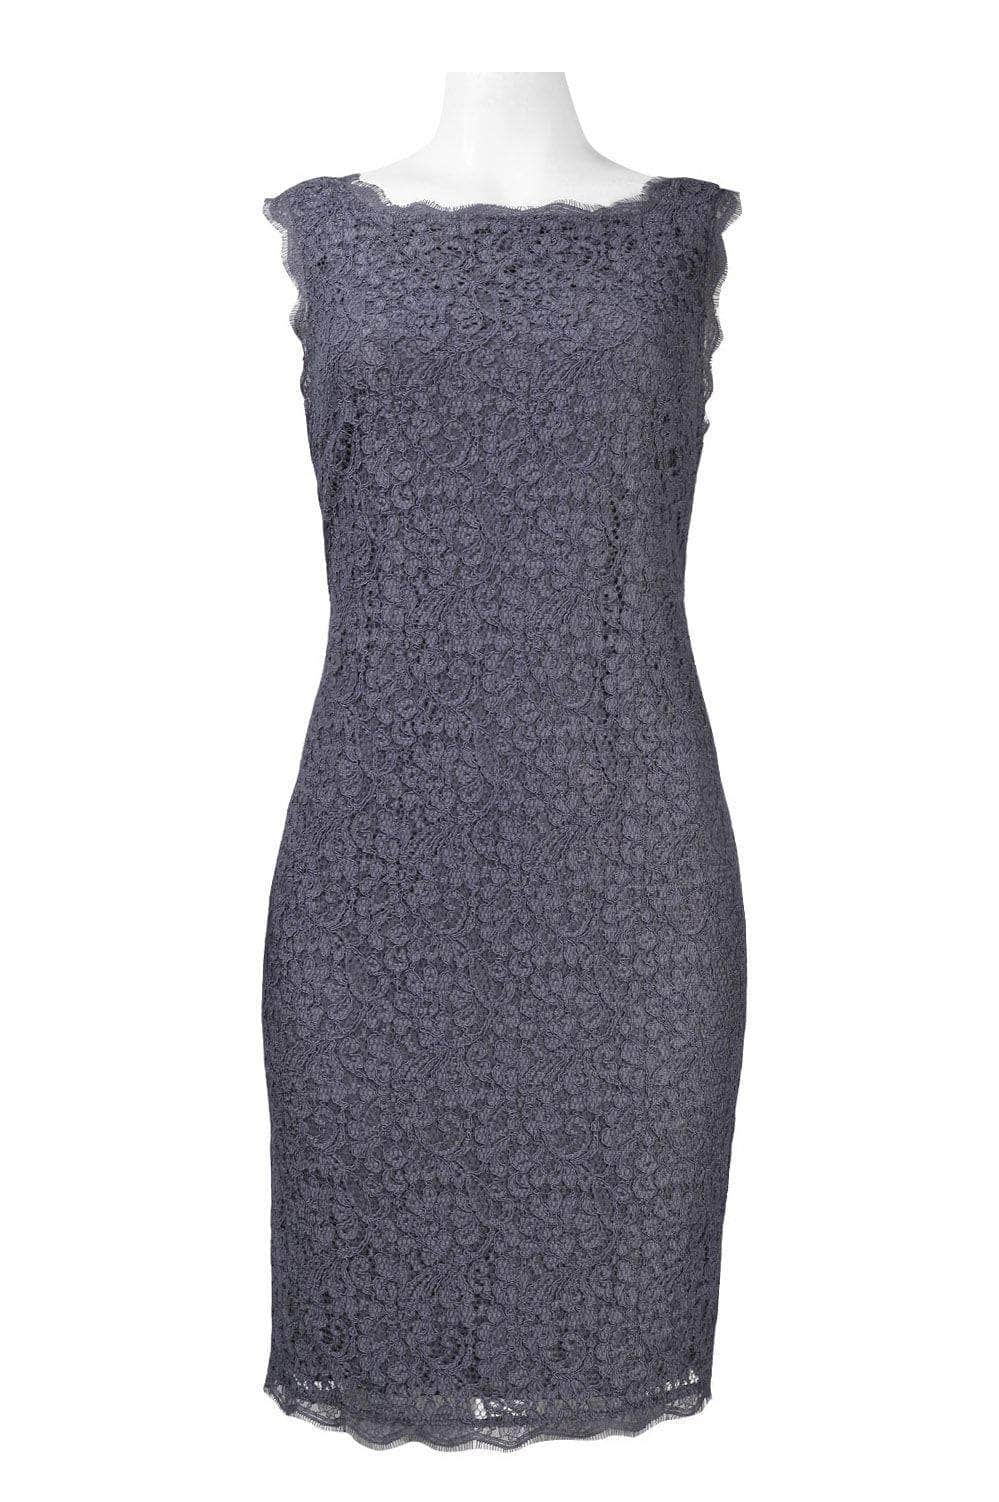 Adrianna Papell Pleat Striped Filigree Lace Dress, $180